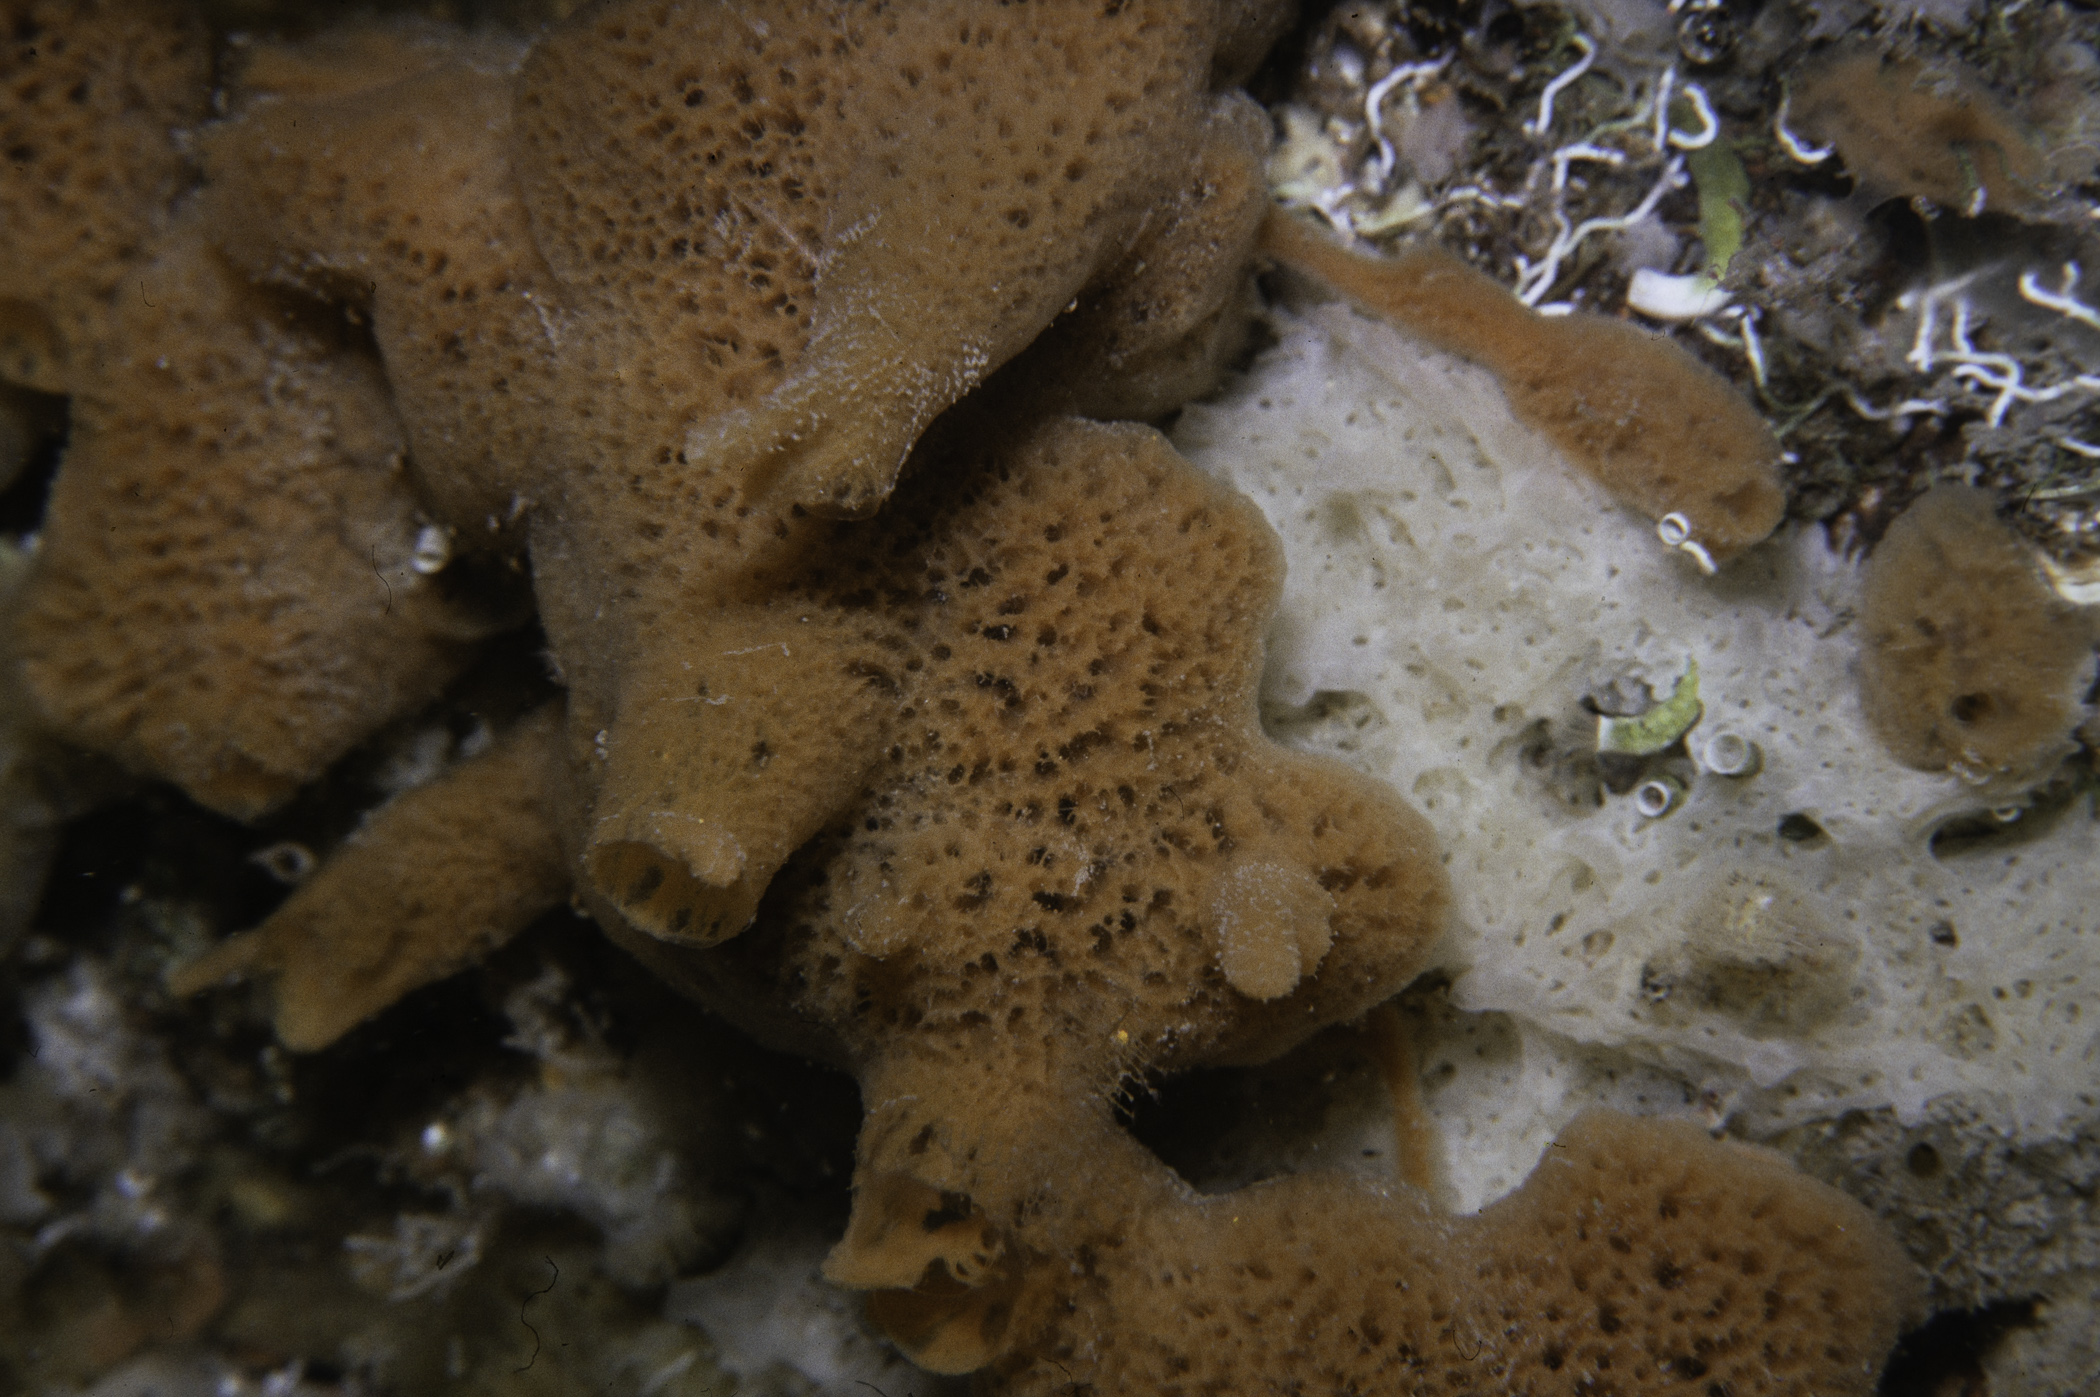 Amphilectus fucorum, Clathrina coriacea. Site: Lee's Wreck, Strangford Lough. 